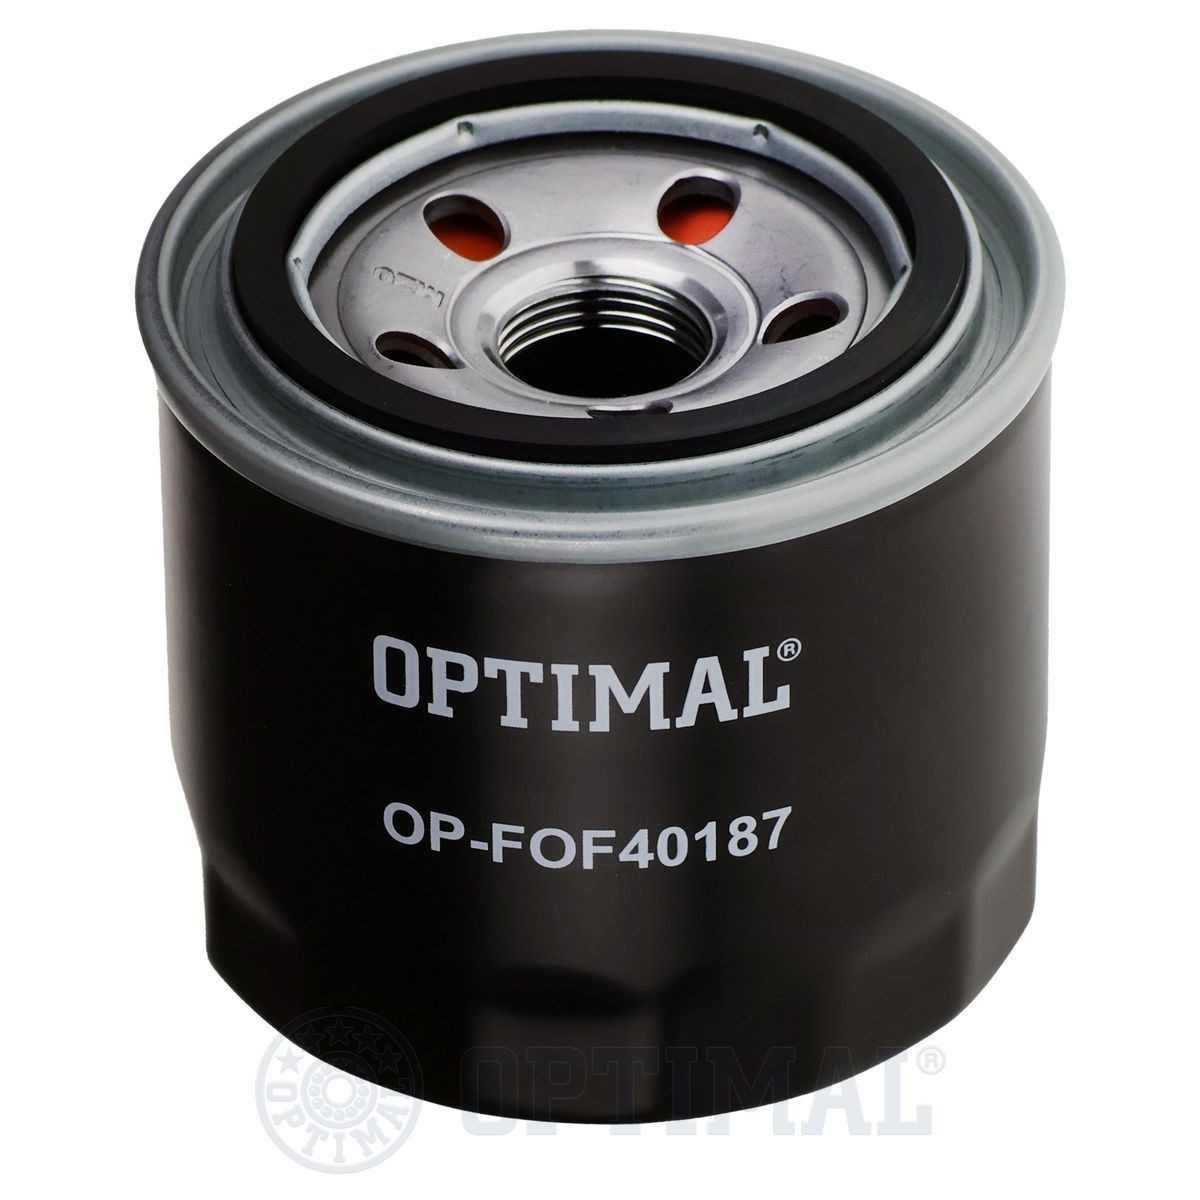 OPTIMAL OP-FOF40187 Oil filter 8-94430-411